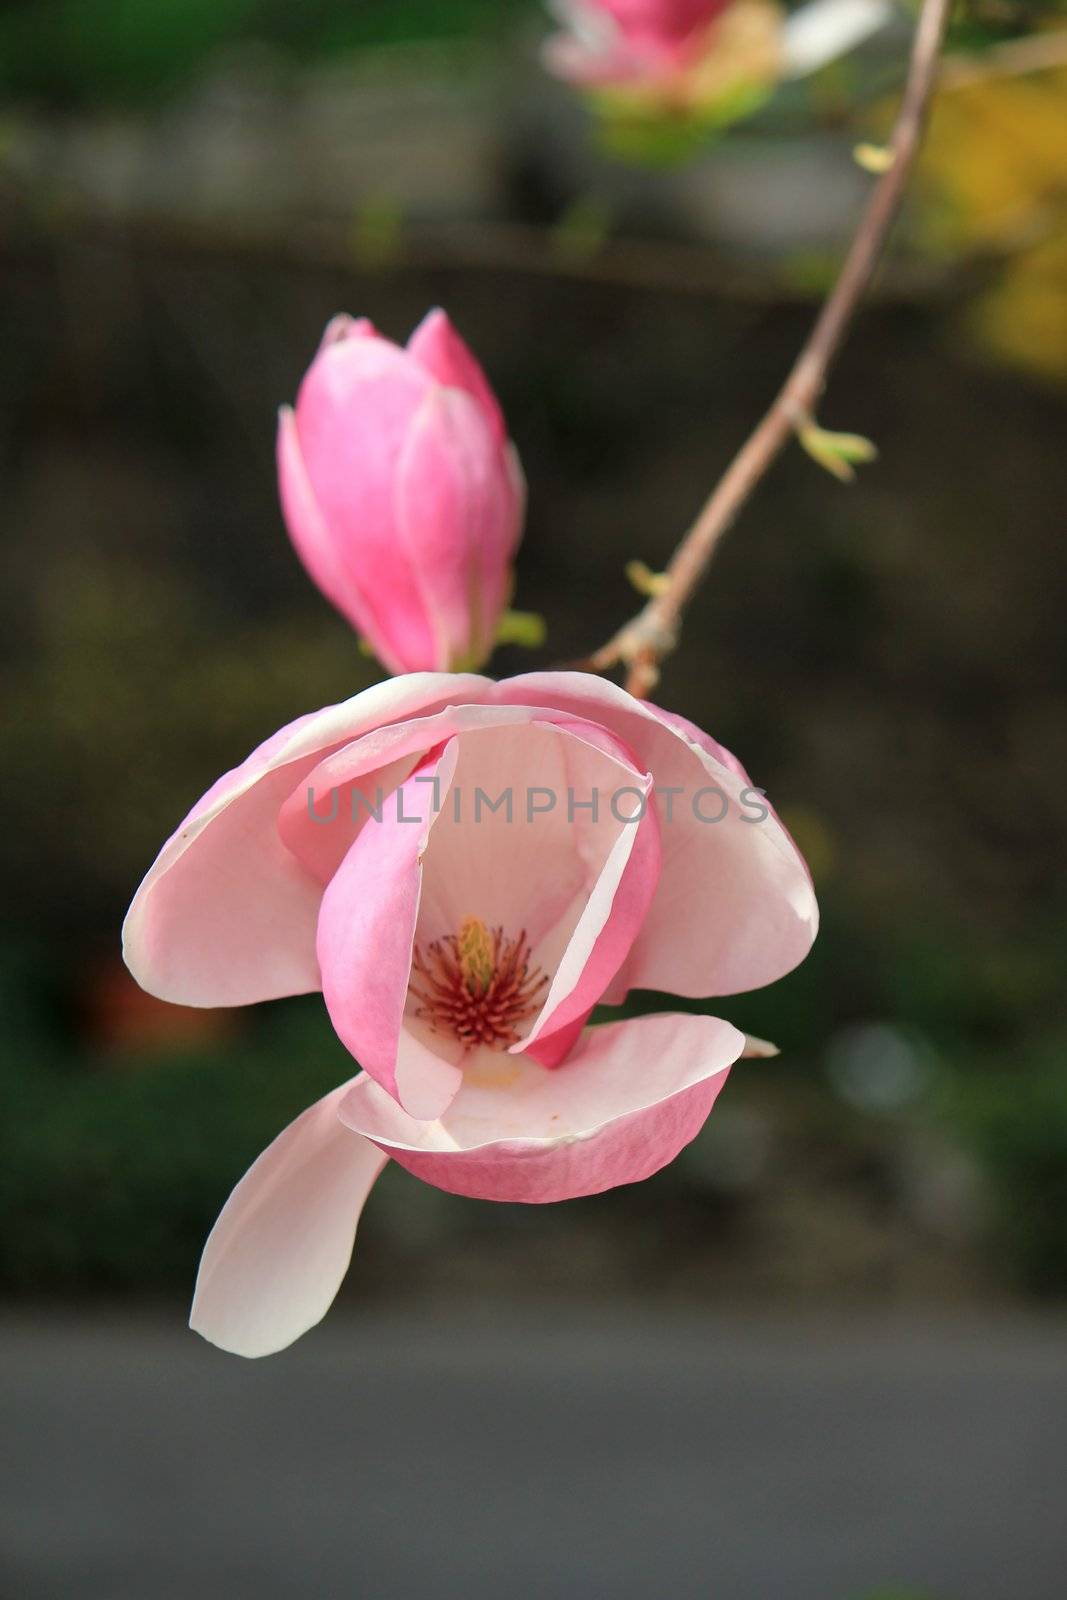 Magnolia flower by Elenaphotos21